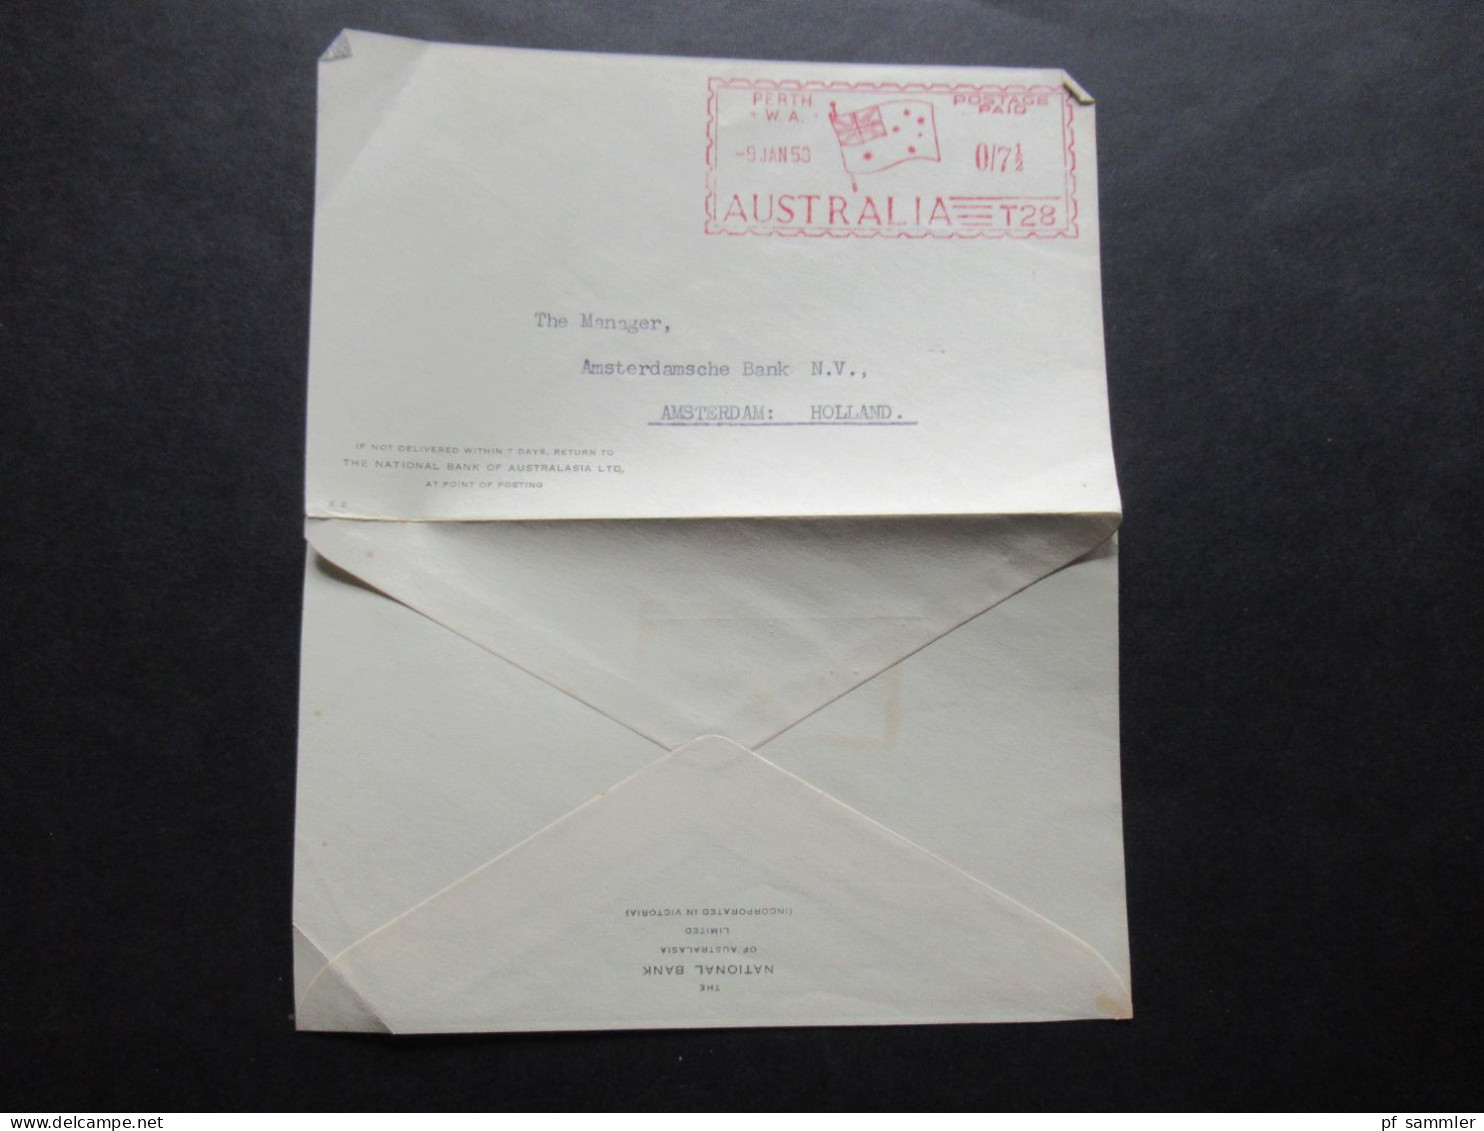 Australien 1958 Auslandsbrief Der National Bank Of Australia Mit Freistempel Perth WA Postage Paid Australia T 28 - Covers & Documents